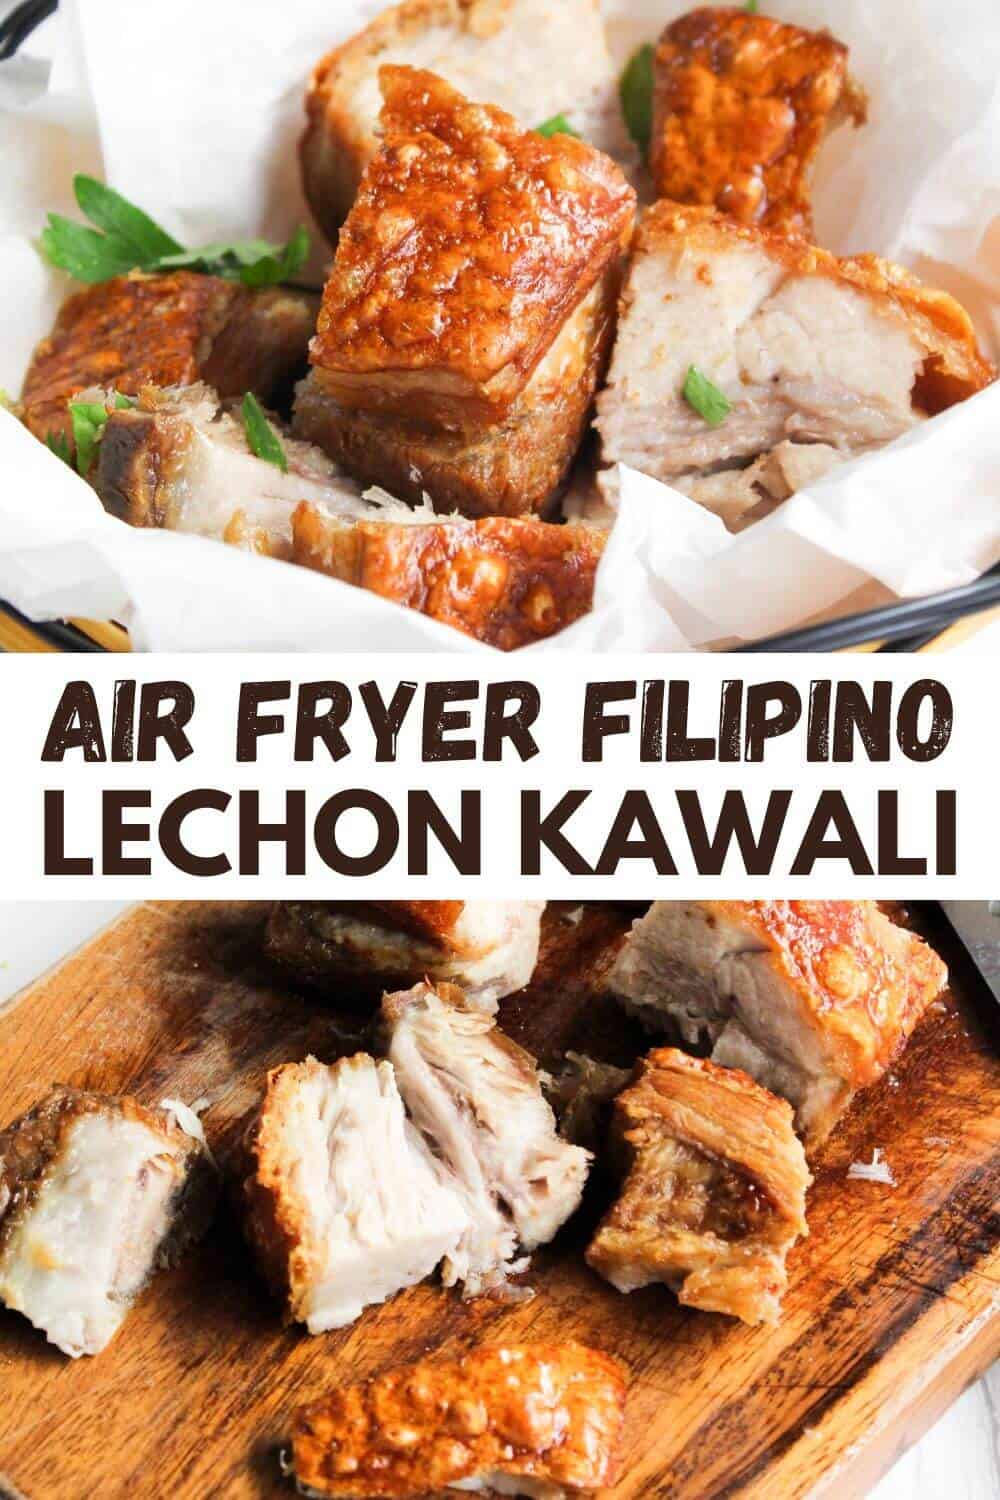 Air fryer filipino lechon kawali.